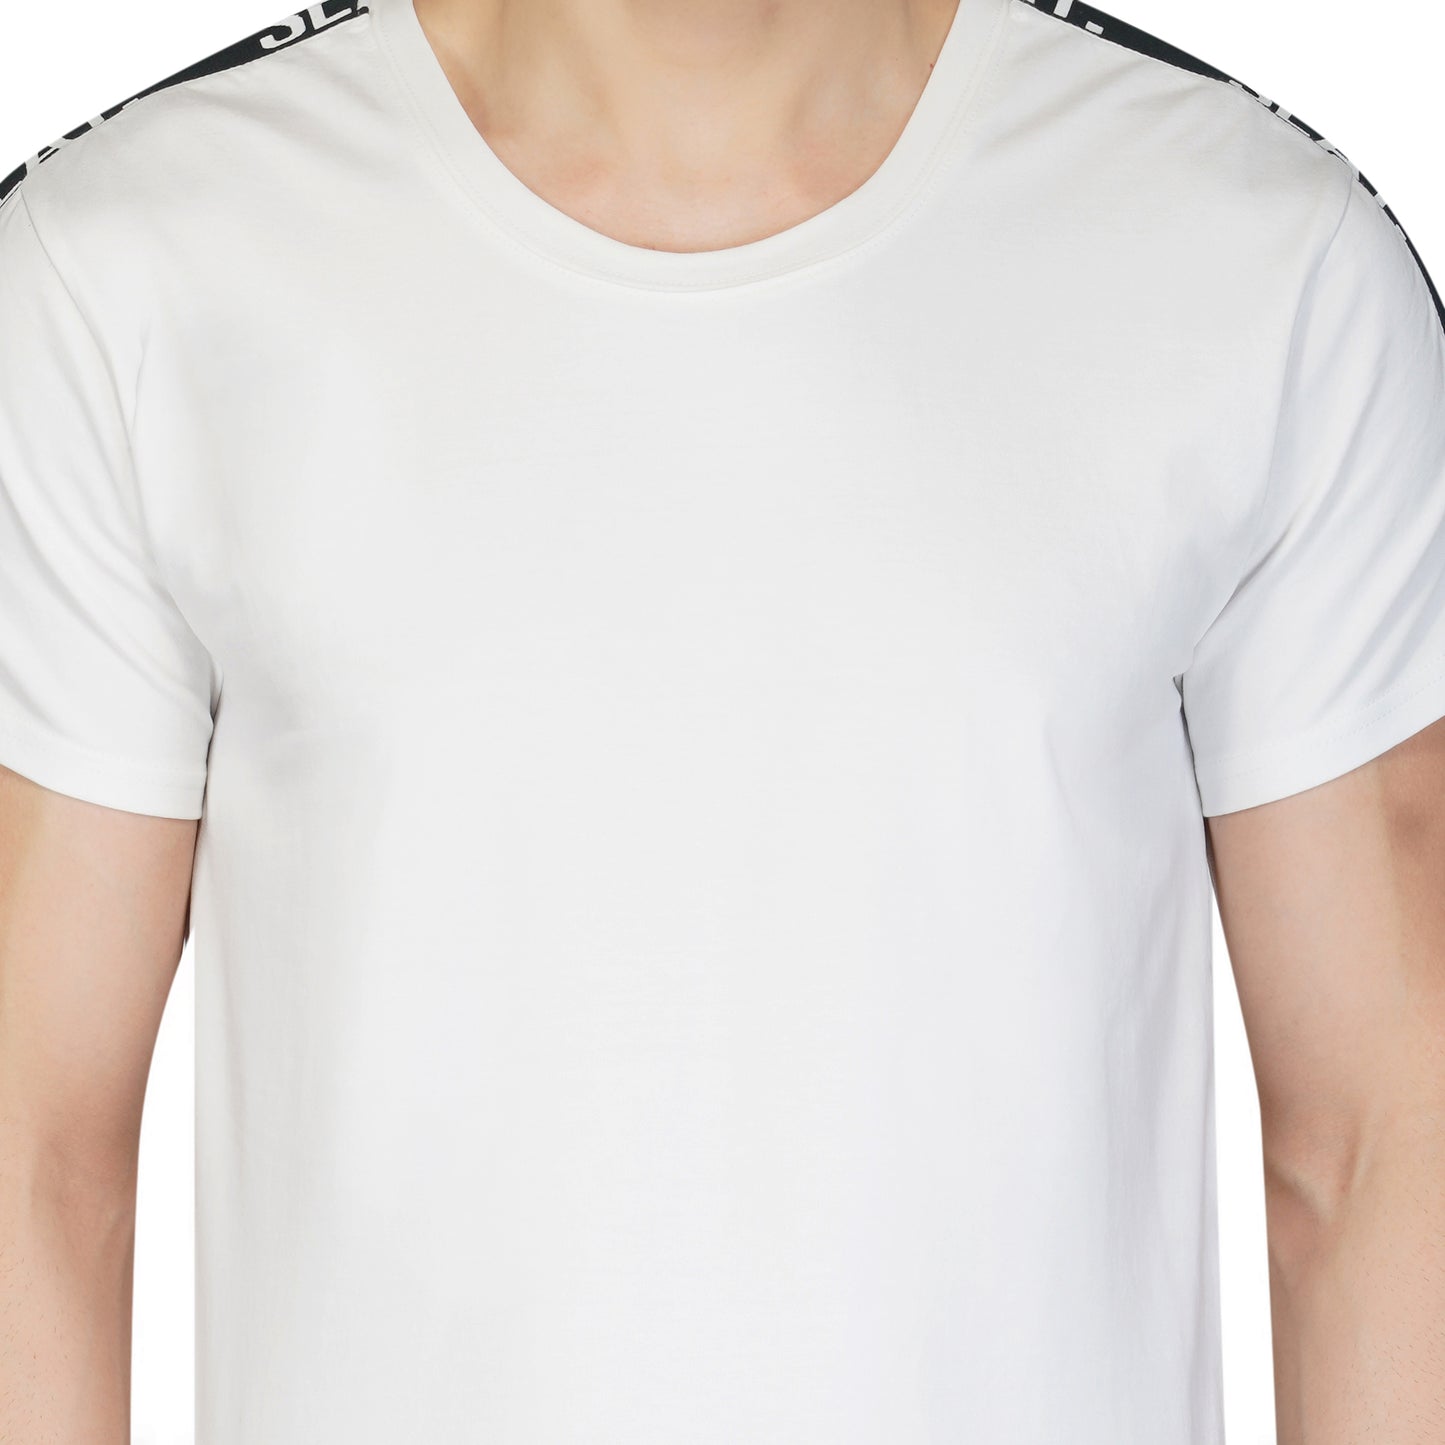 SLAY. Men's White T shirt & Shorts Co-ord Set(4 way Stretch Fabric)